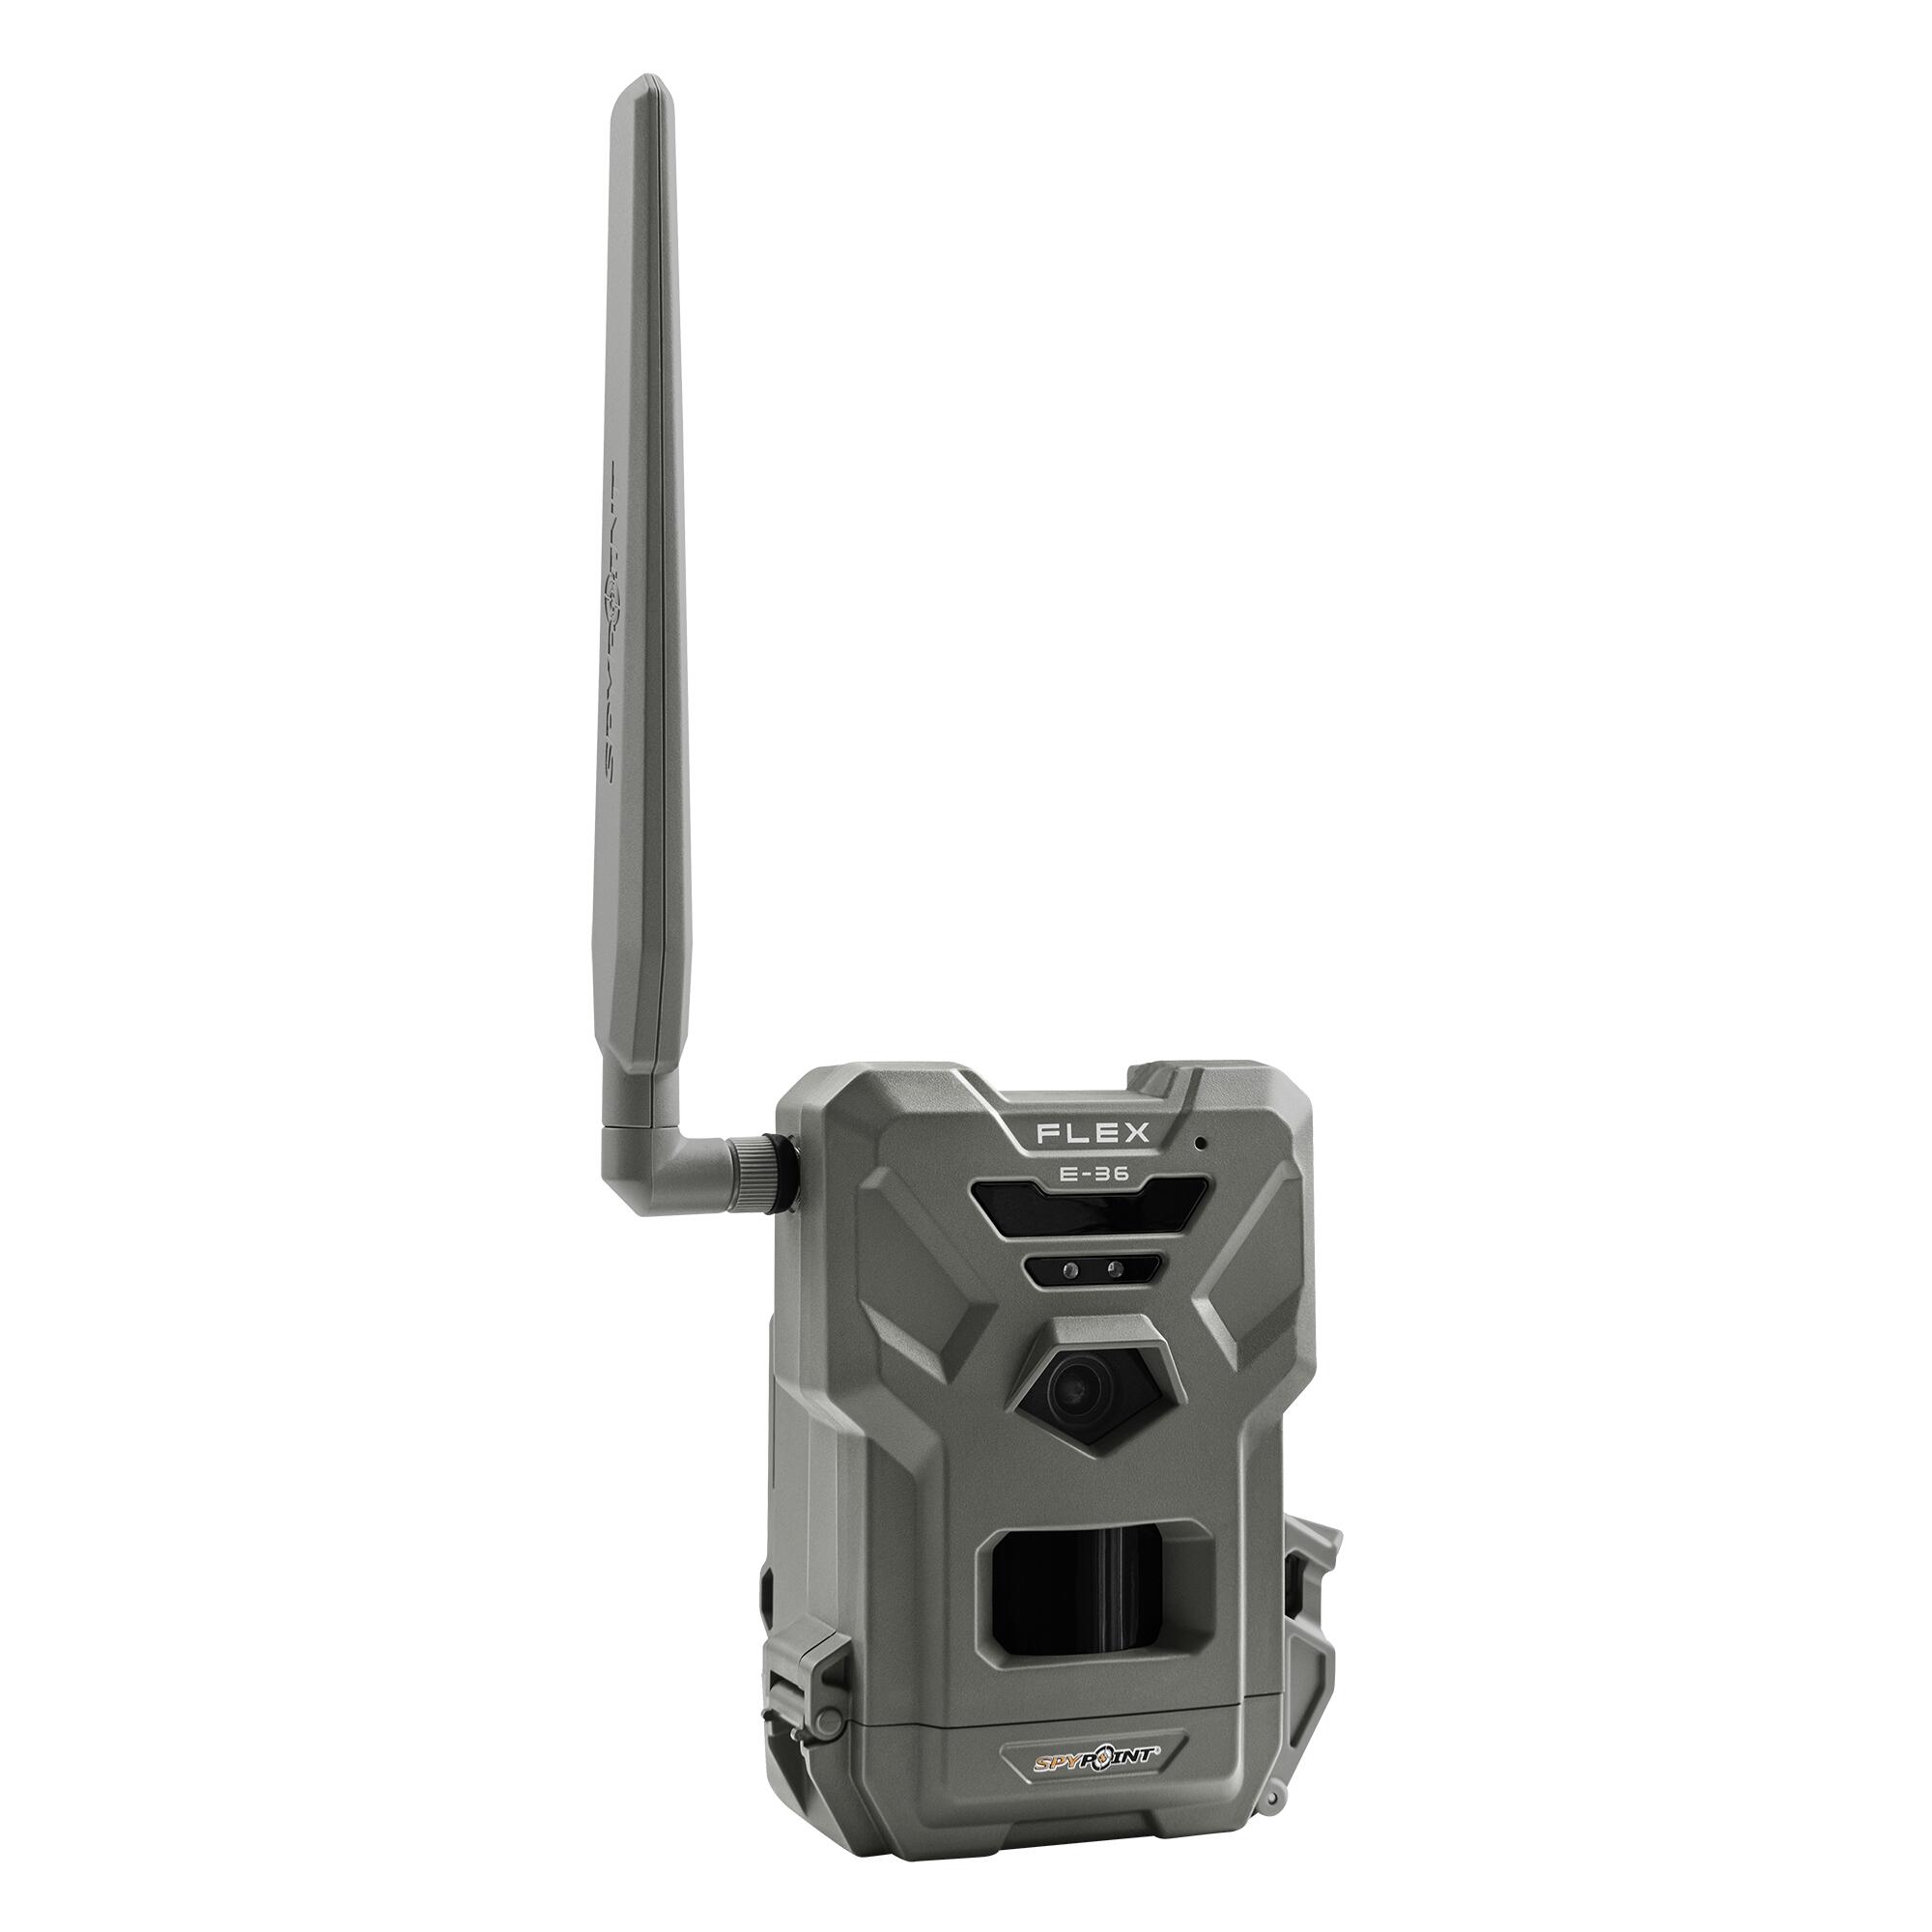 Cellular trail camera Spypoint FLEX-E36 2/12